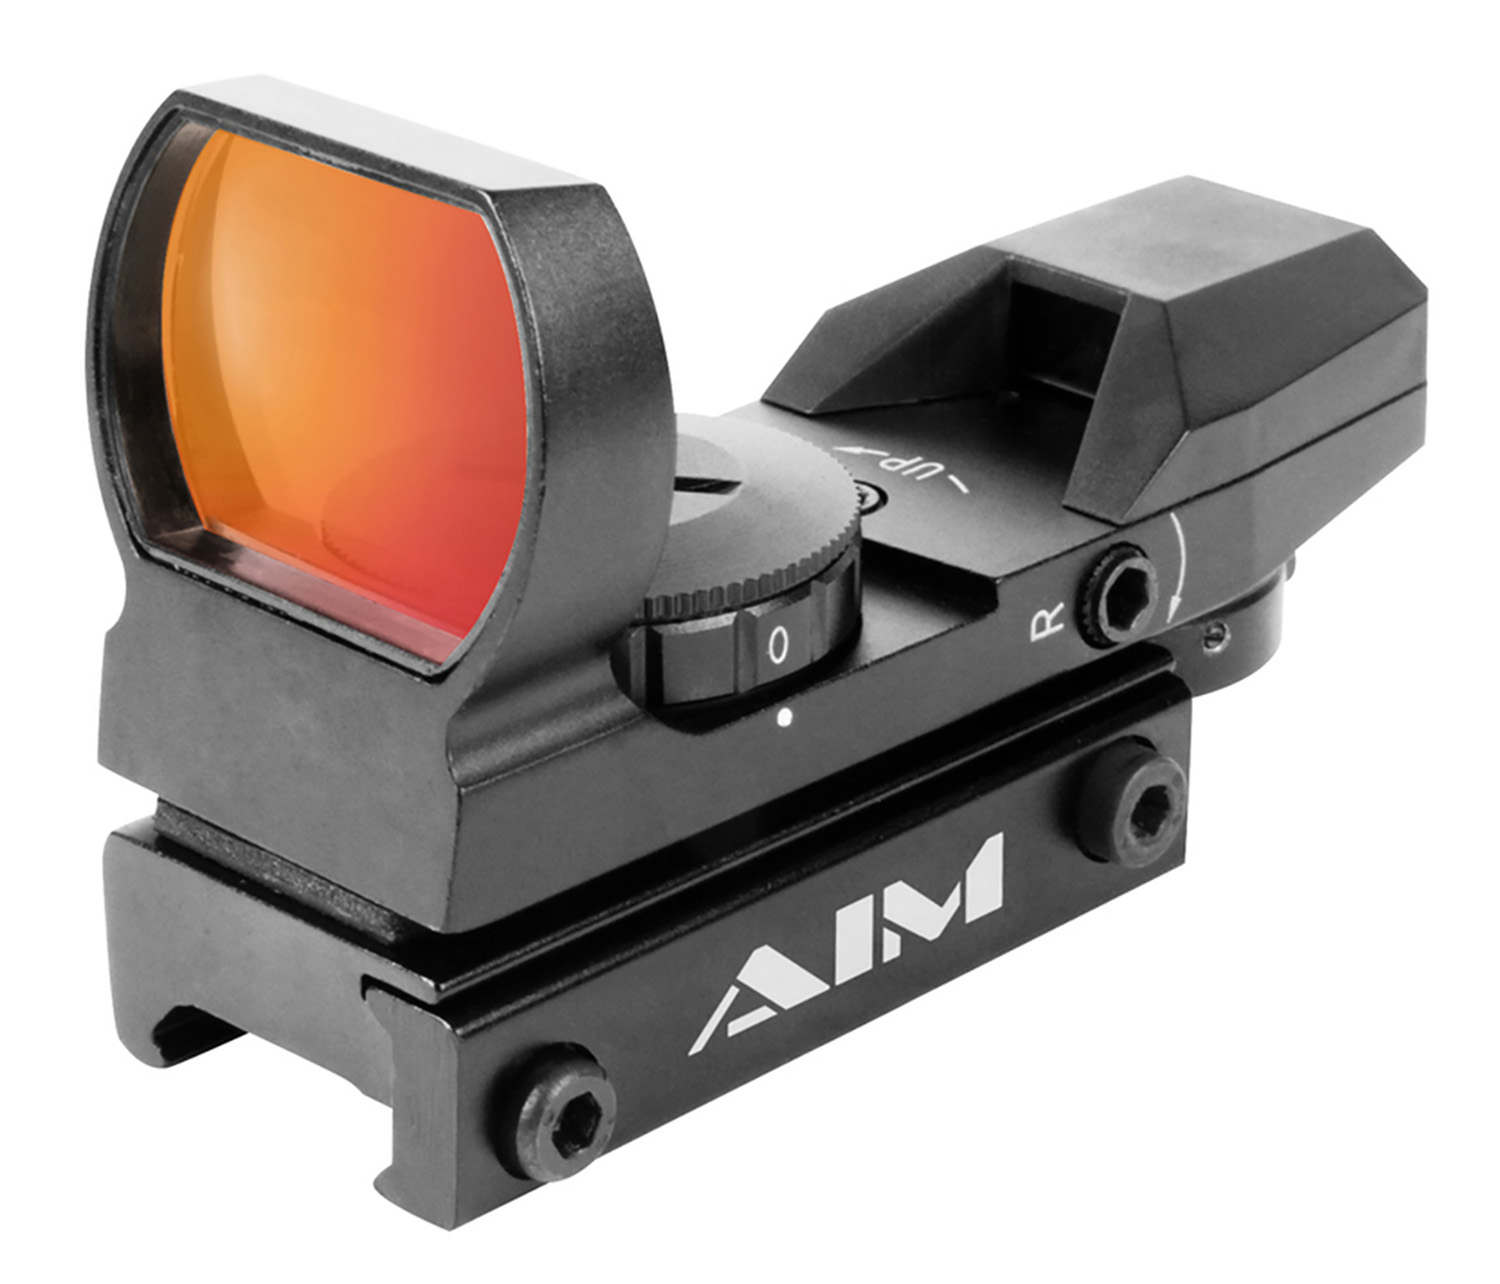 Aim Sports RT401 Reflex Classic Edition Matte Black 1x34mm Illuminated Red Multi Reticle